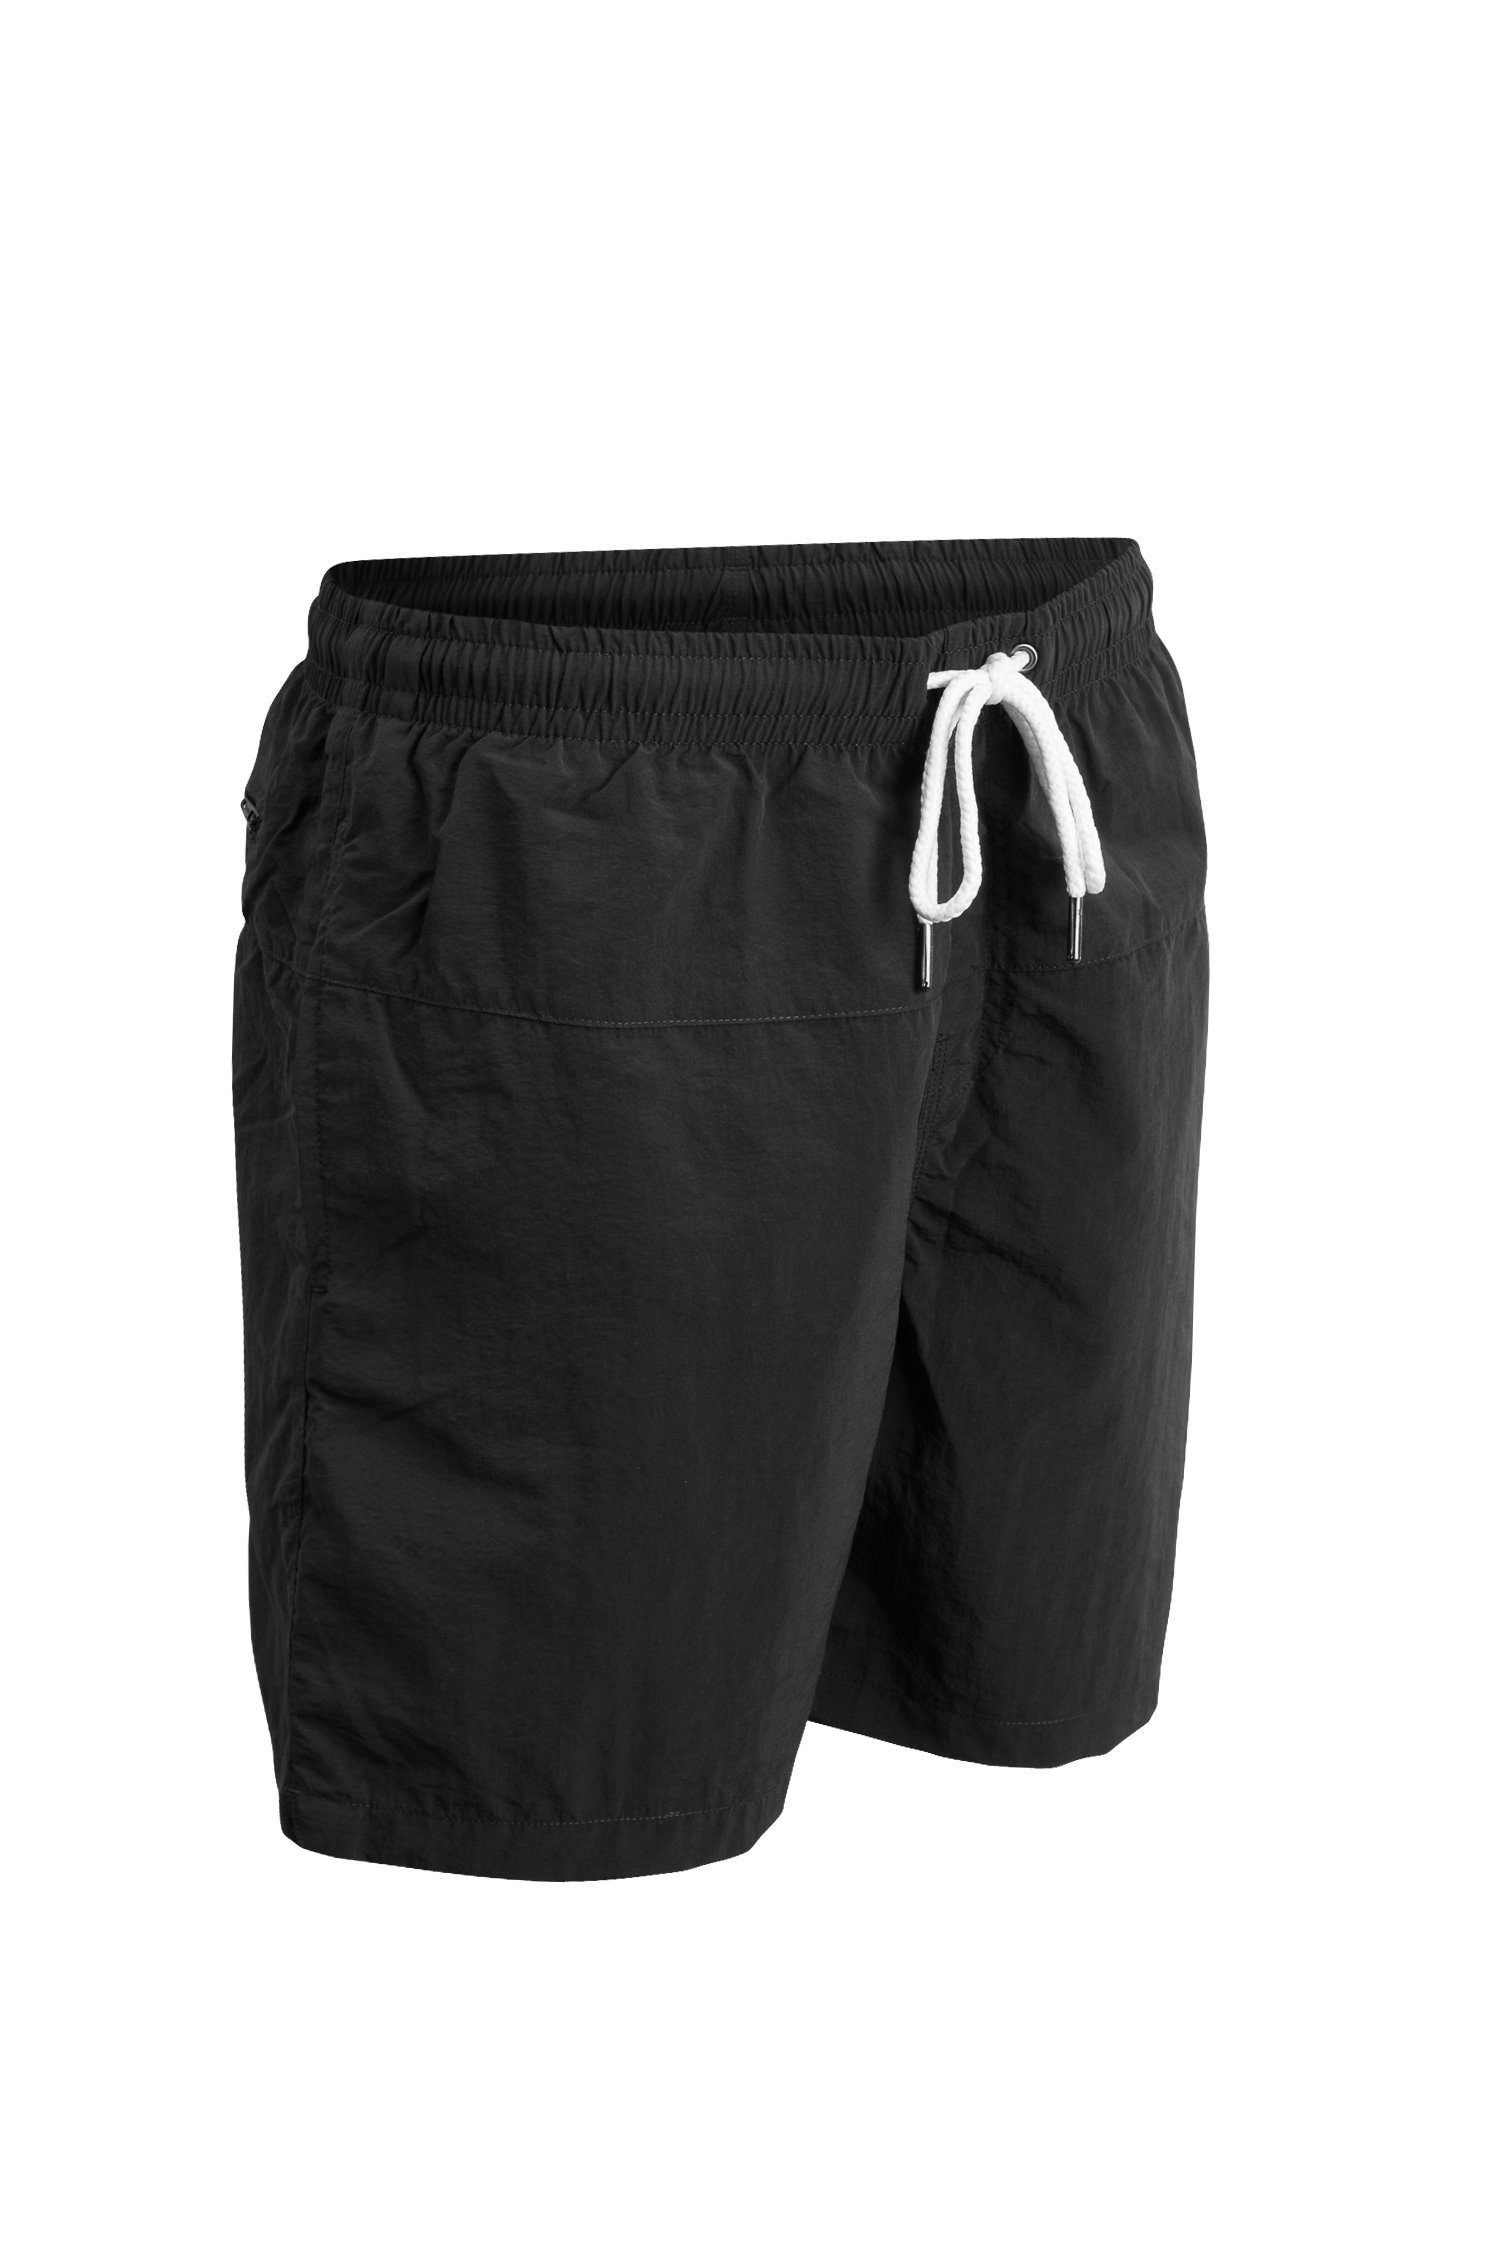 Manufaktur13 Badeshorts Swim Shorts - schnelltrocknend Out Black Badehosen